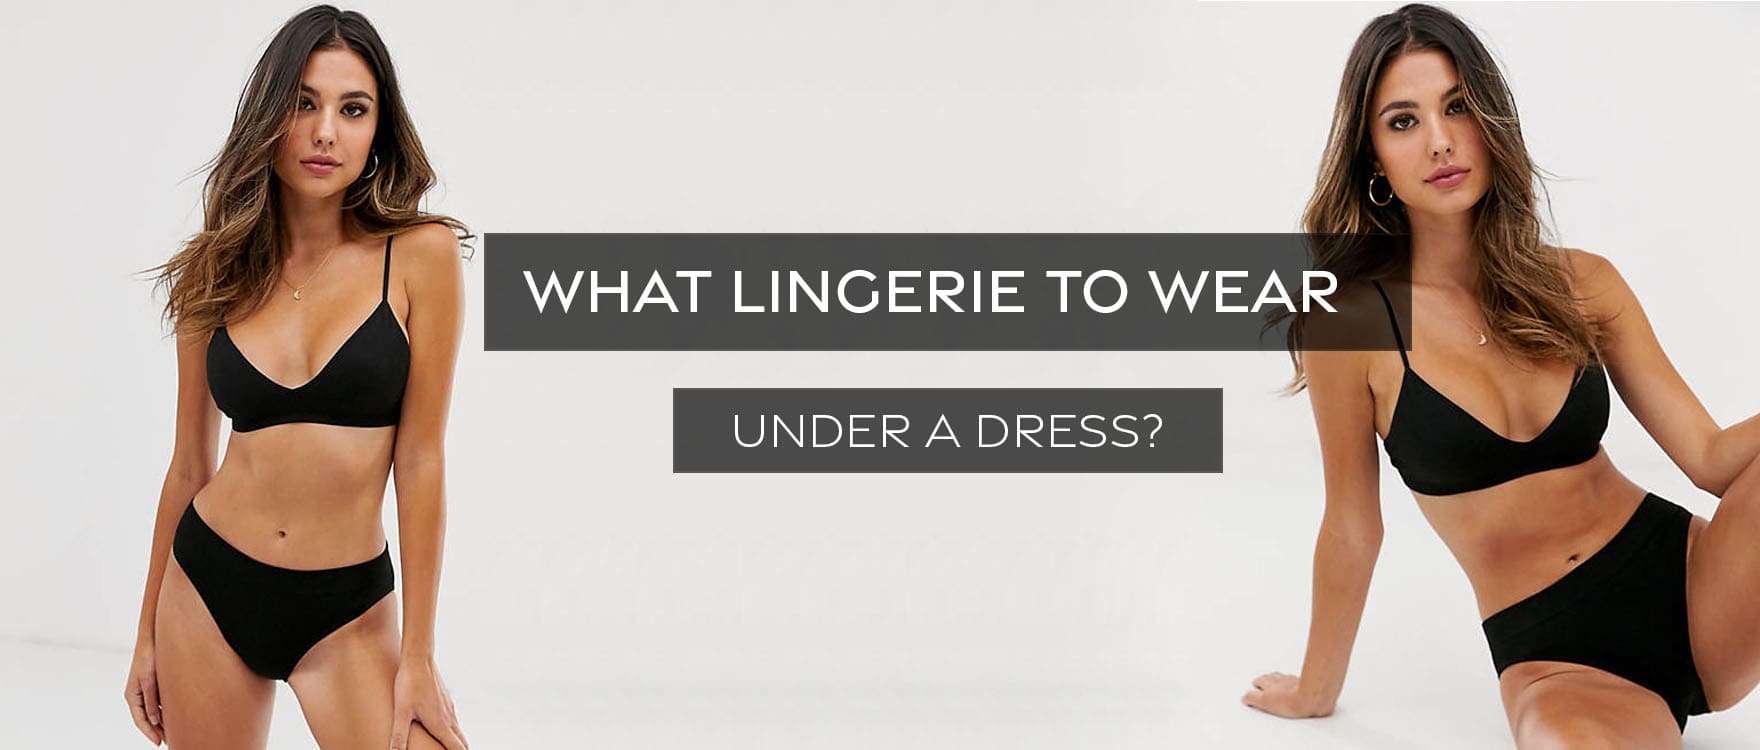 Do women usually wear lingerie under their wedding dress